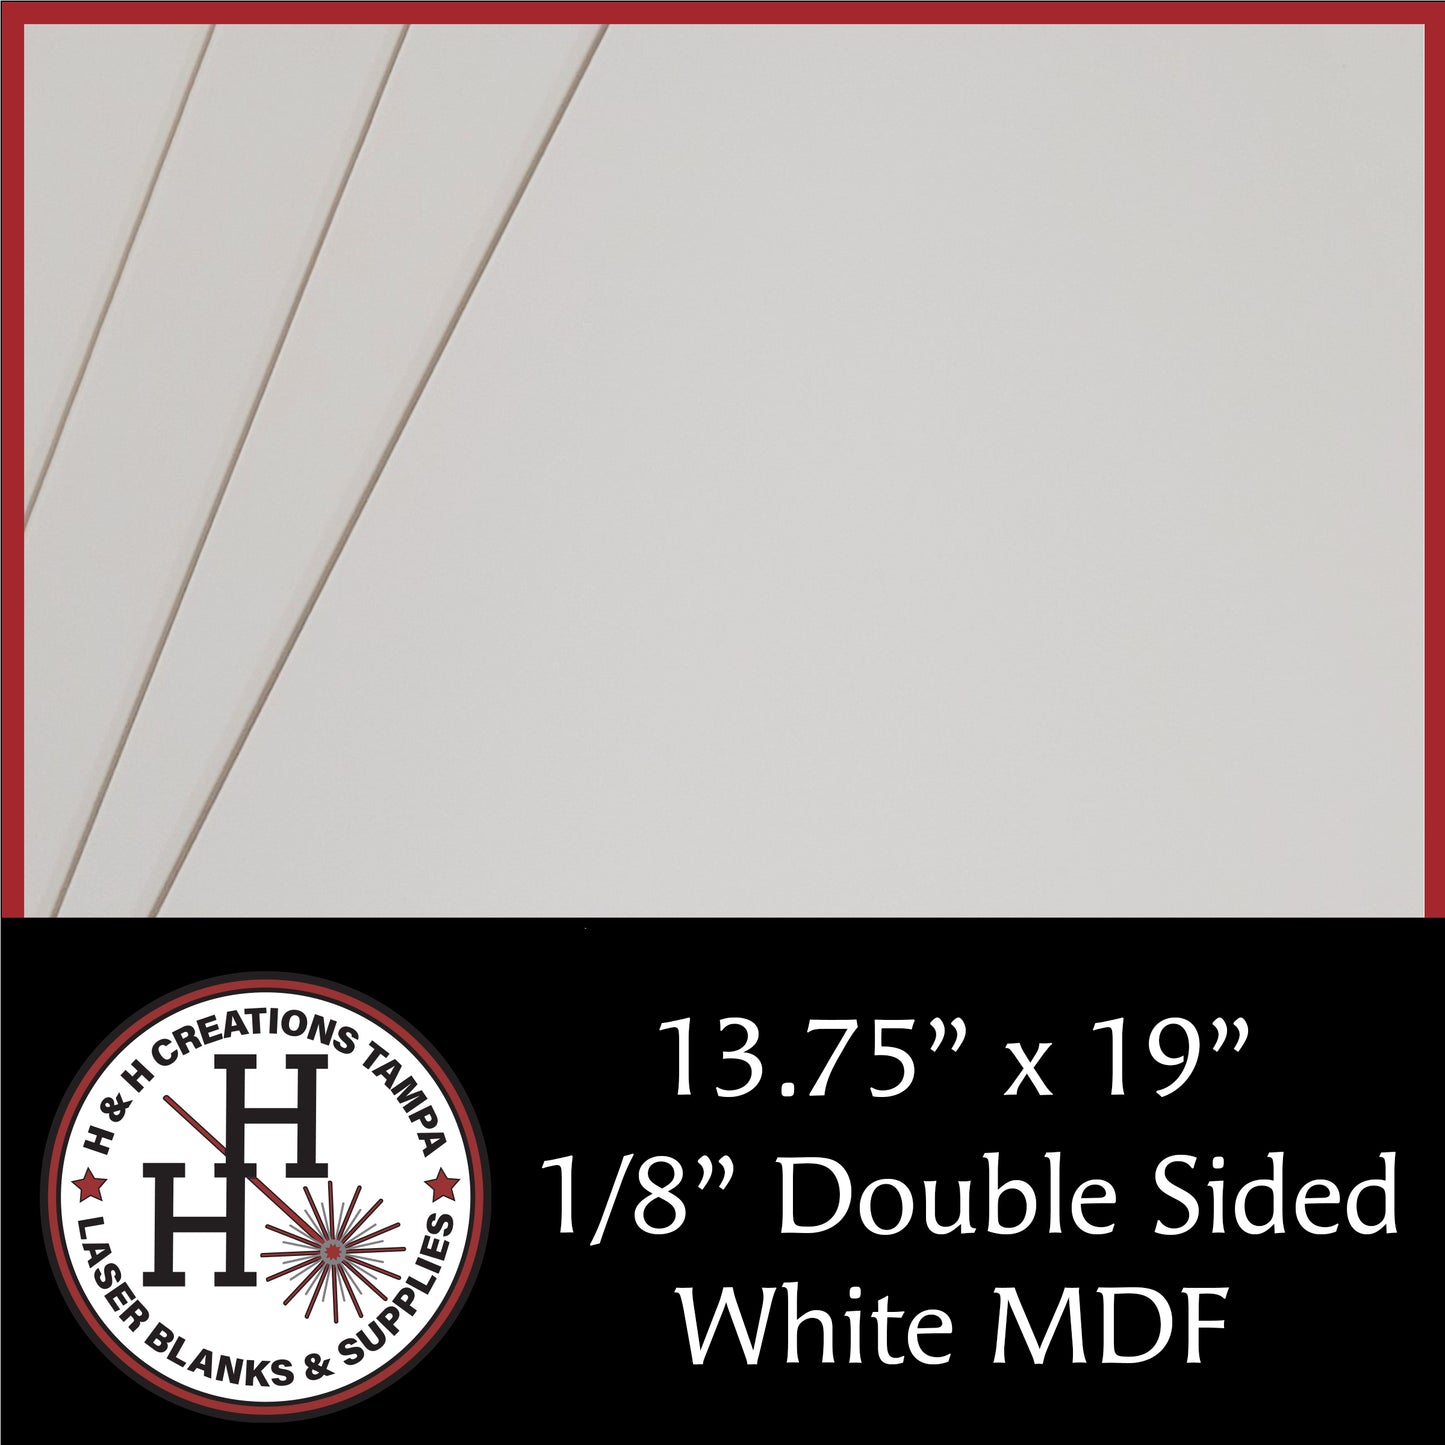 1/8" Premium Double-Sided White MDF/HDF Draft Board 13.75" x 19"